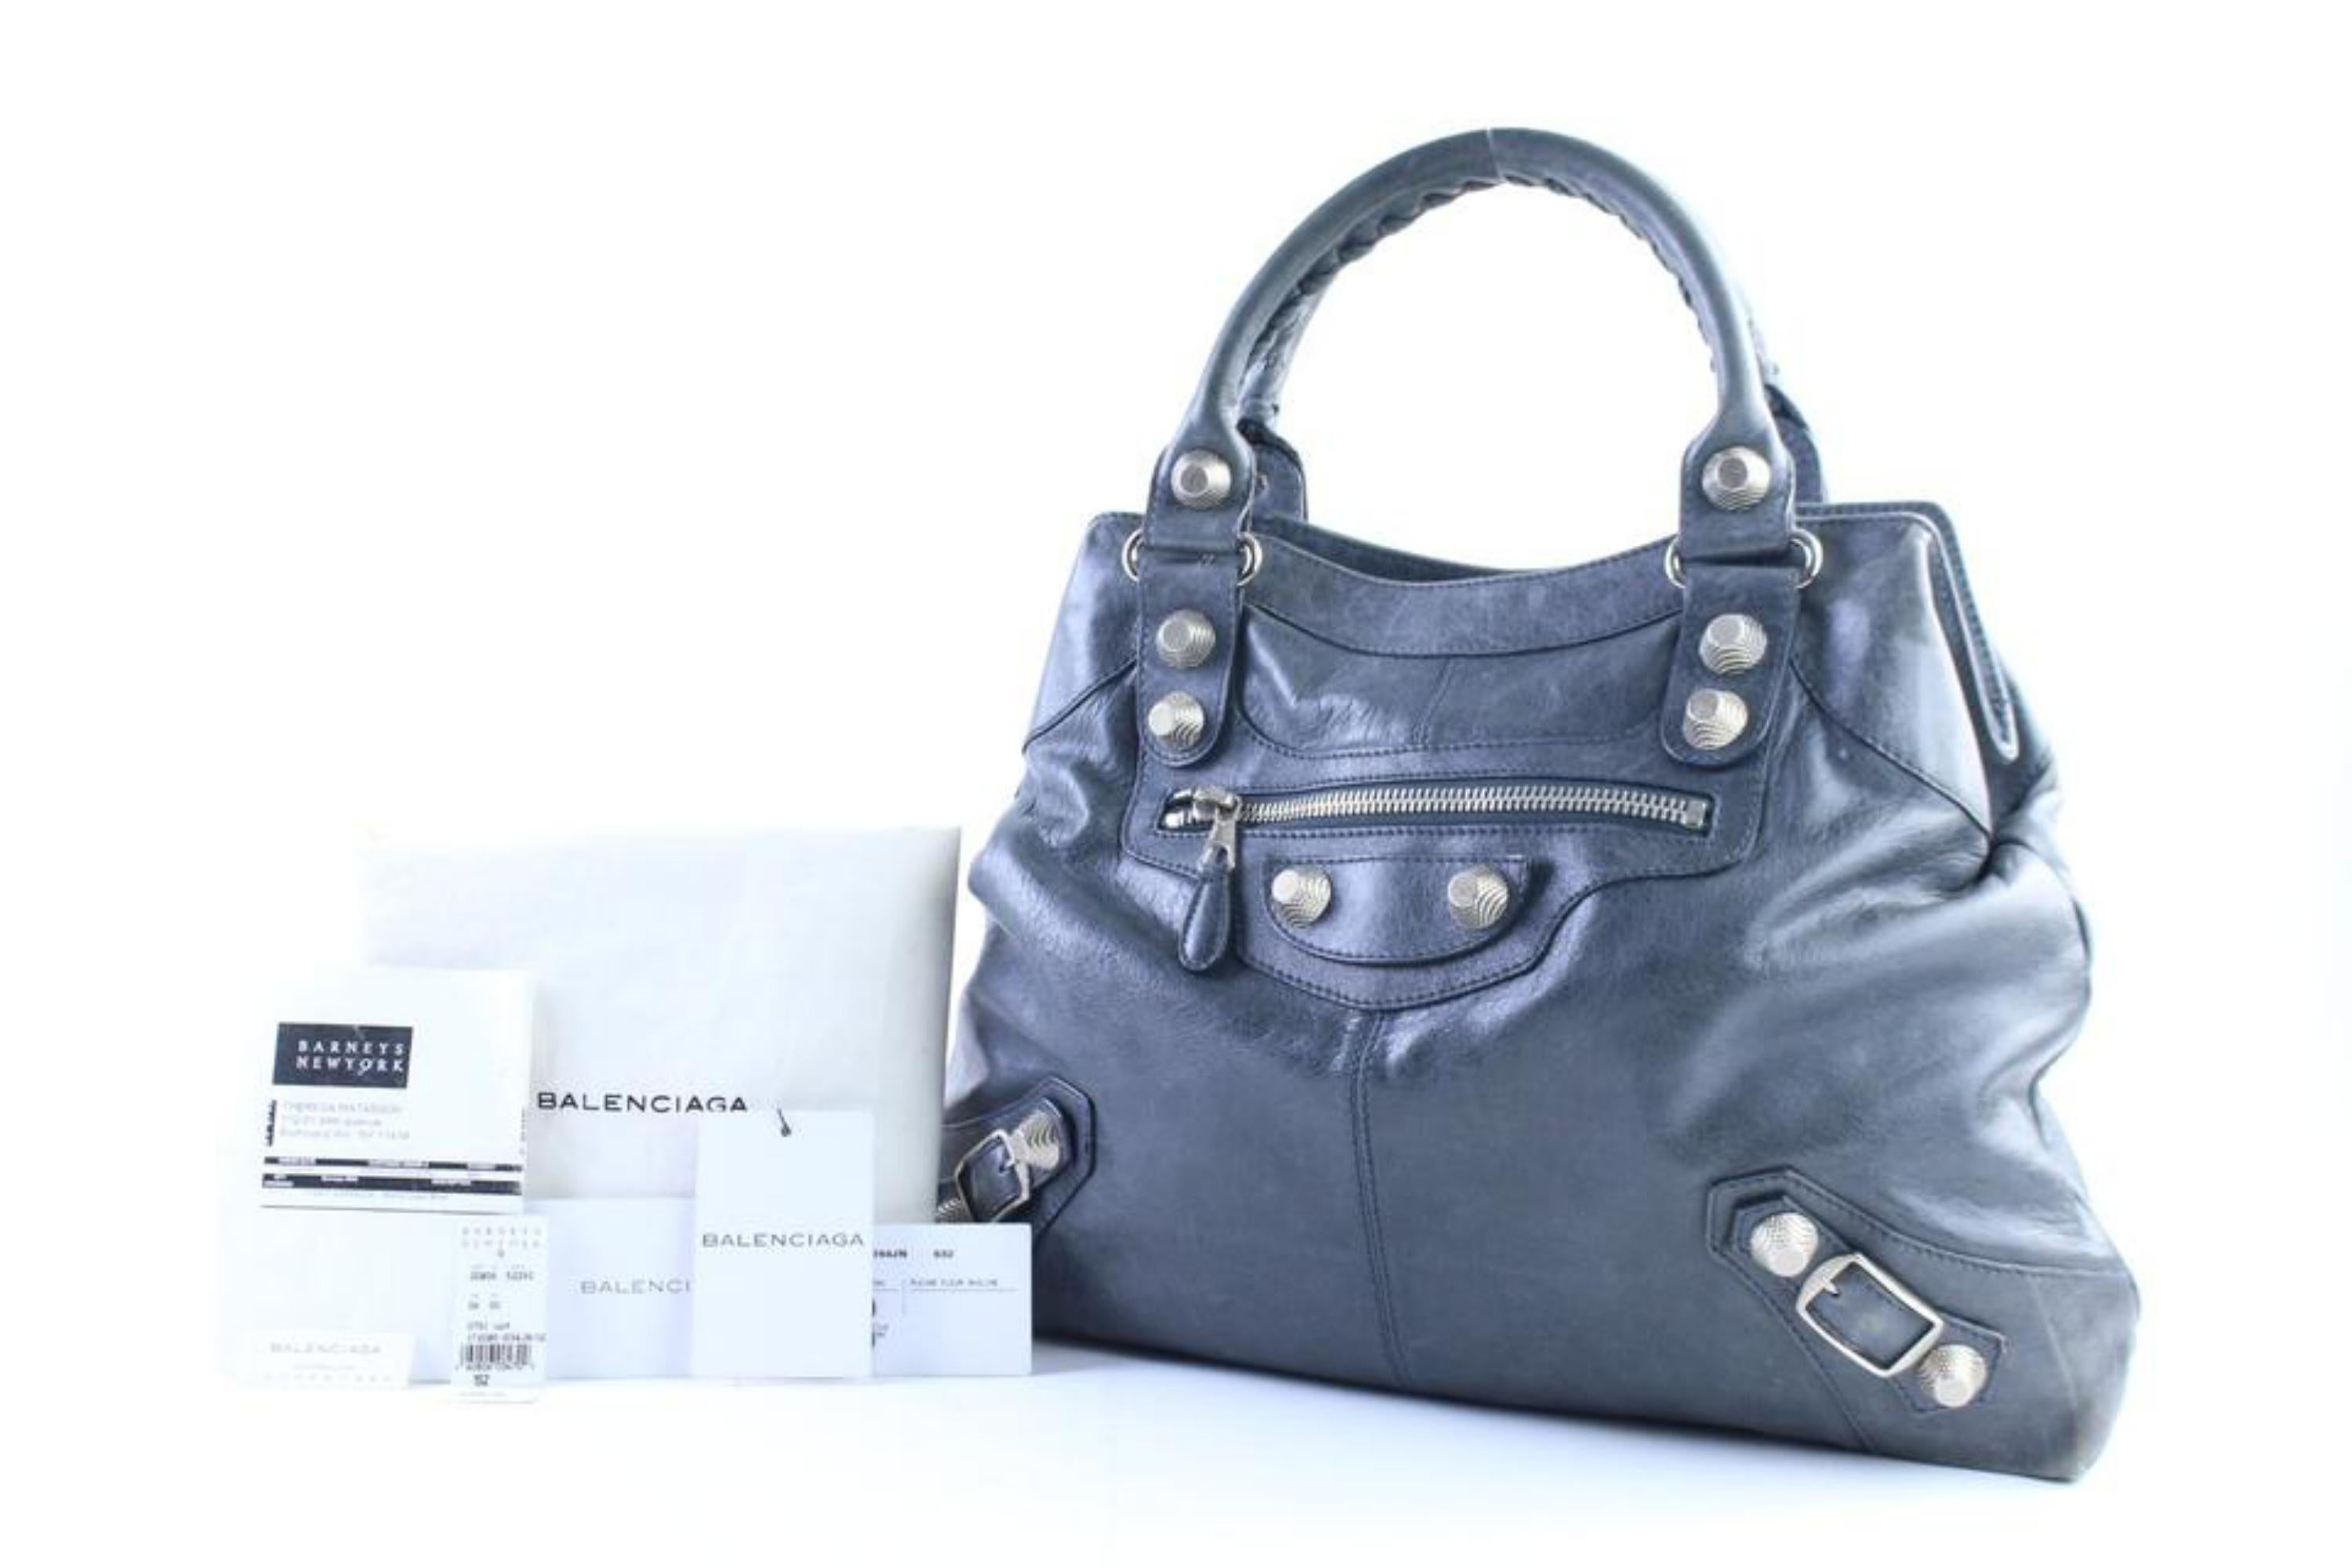 Balenciaga Brief Bag - For Sale on 1stDibs